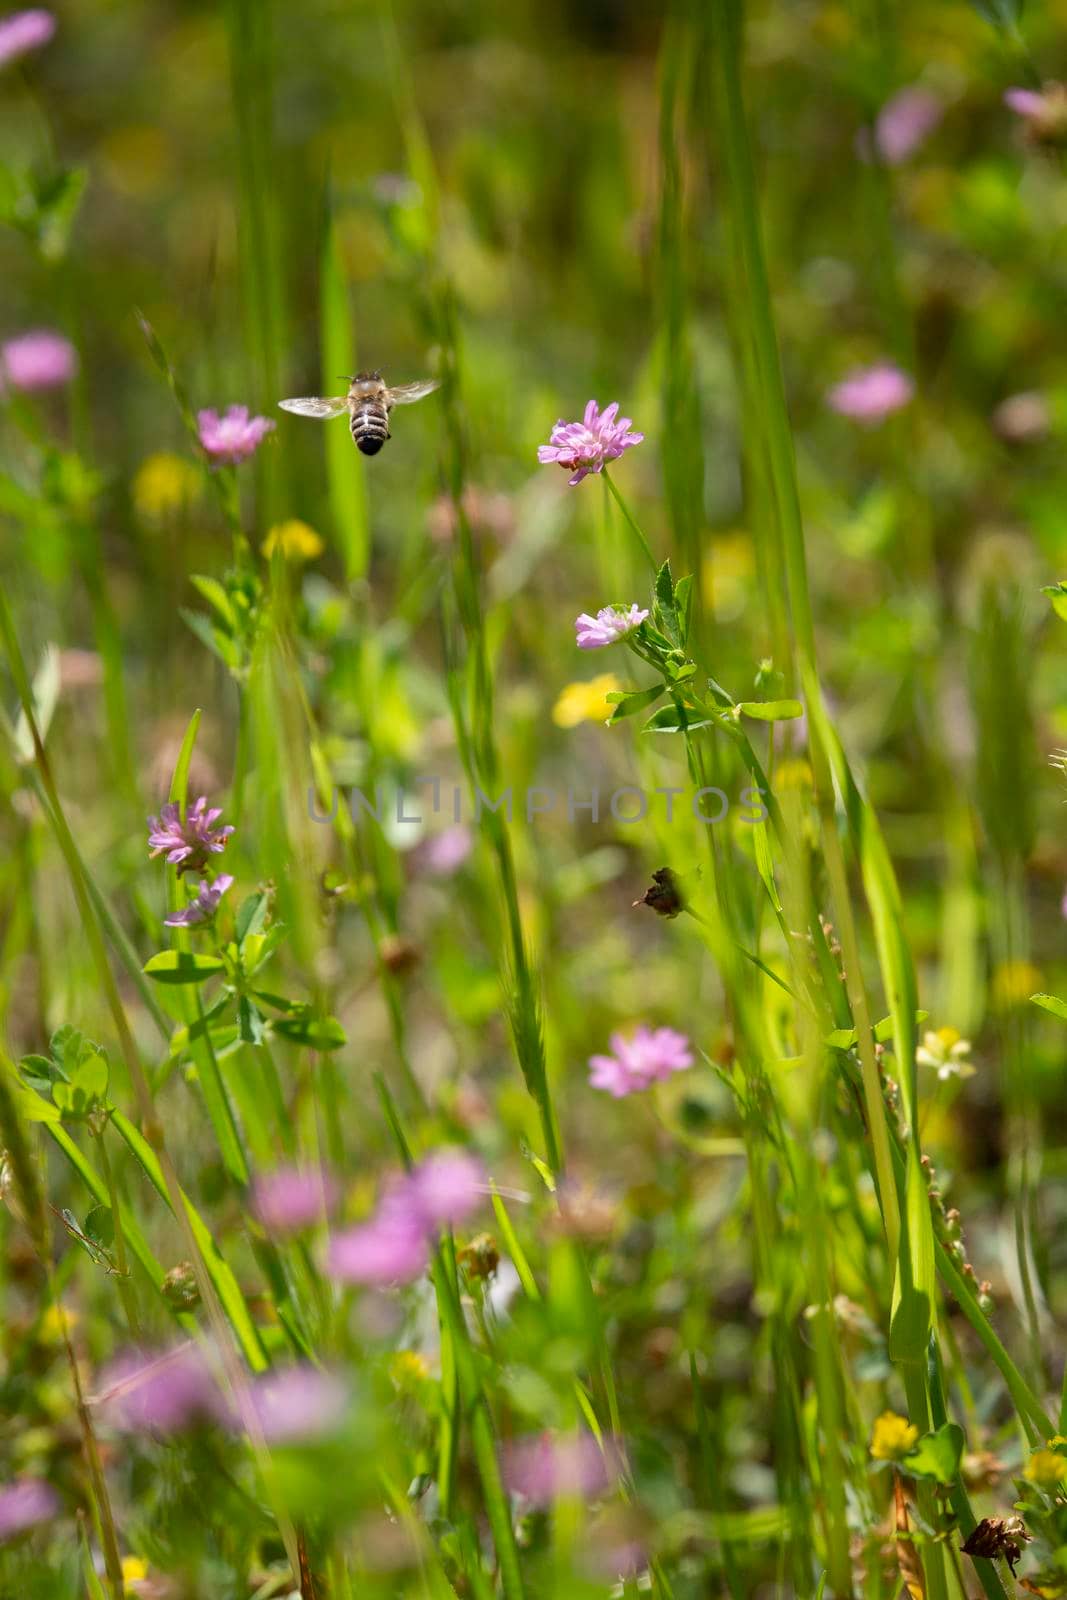 Honeybee (Apis) in flight through a meadow